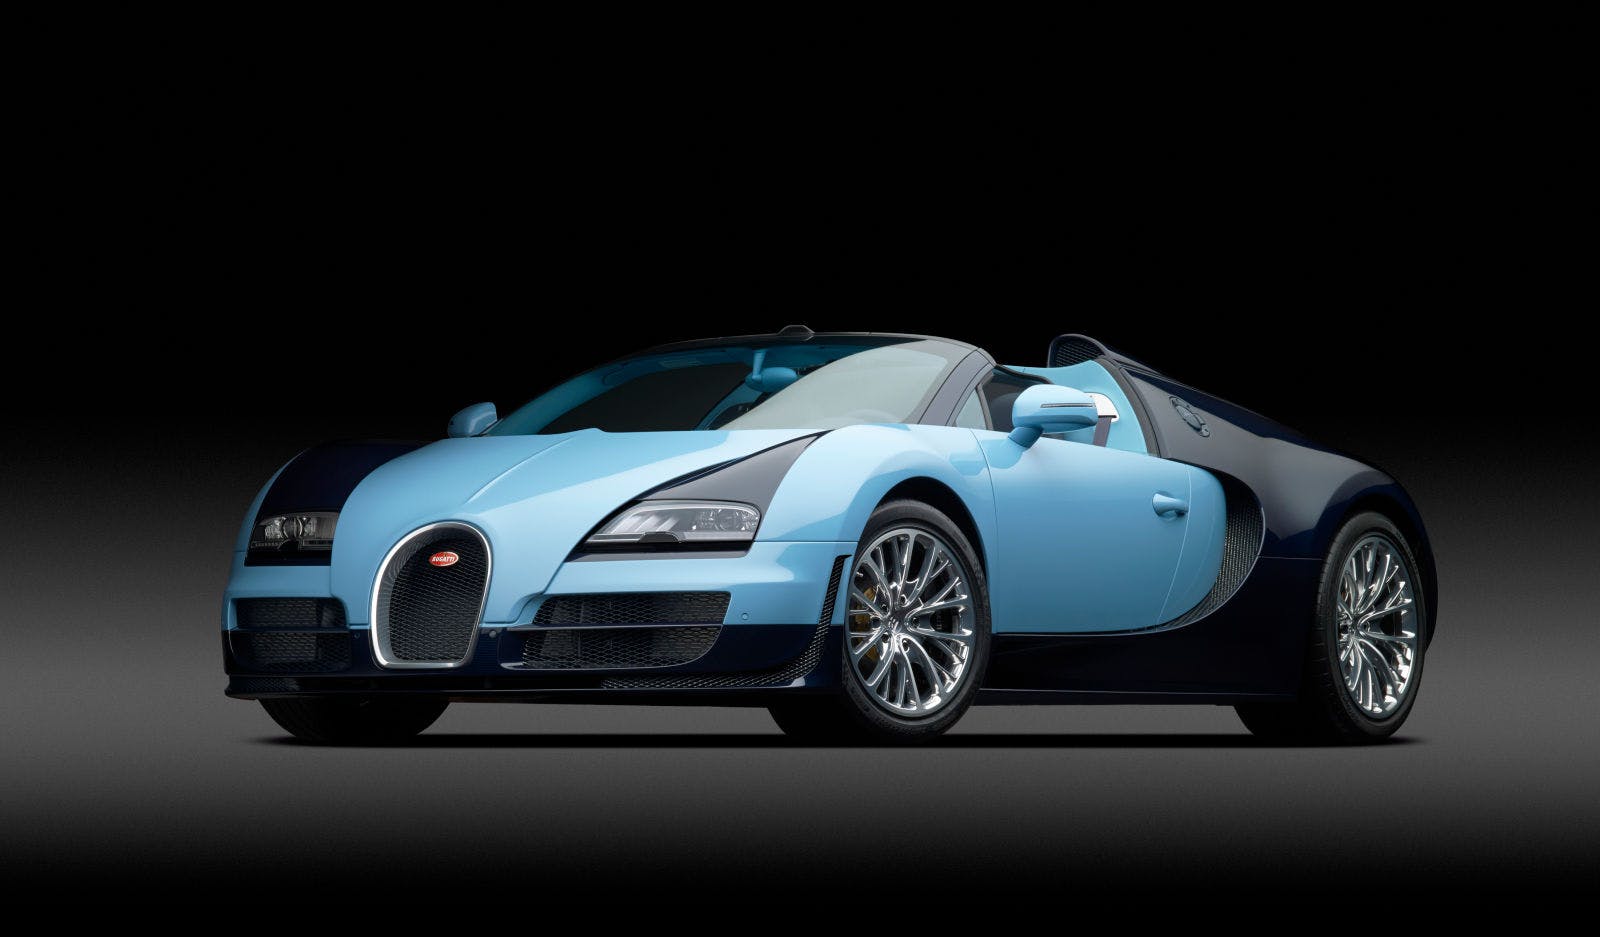 Bugatti Legend “Jean-Pierre Wimille”